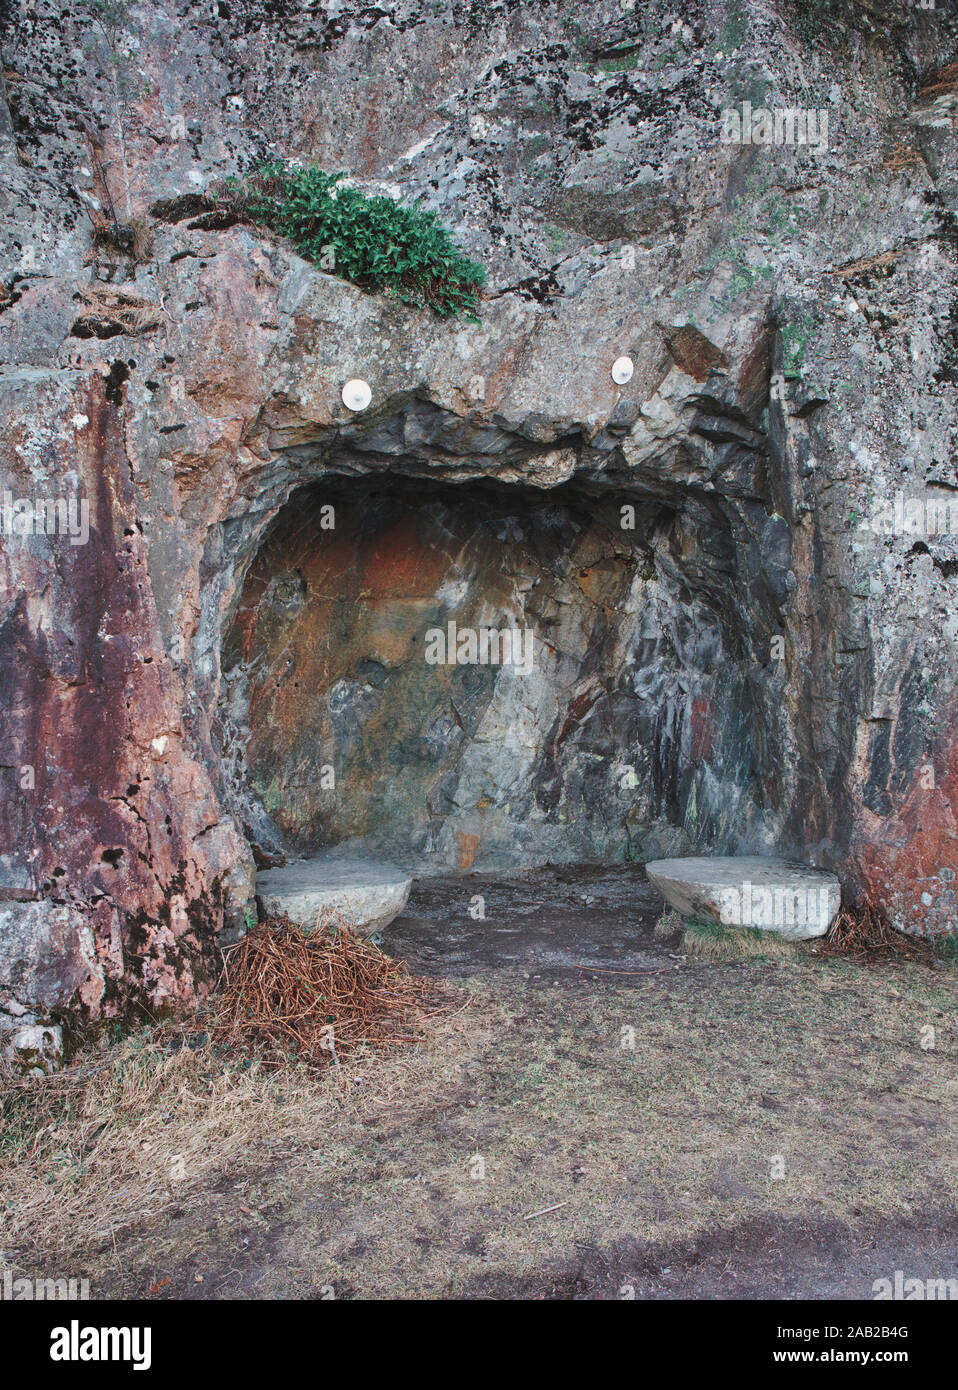 Kleine Höhle mit Sitze in Rock in der Bergianska Tradgarden geschnitzt, (Bergius Botanischer Garten), Frescati, Stockholm, Schweden Stockfoto